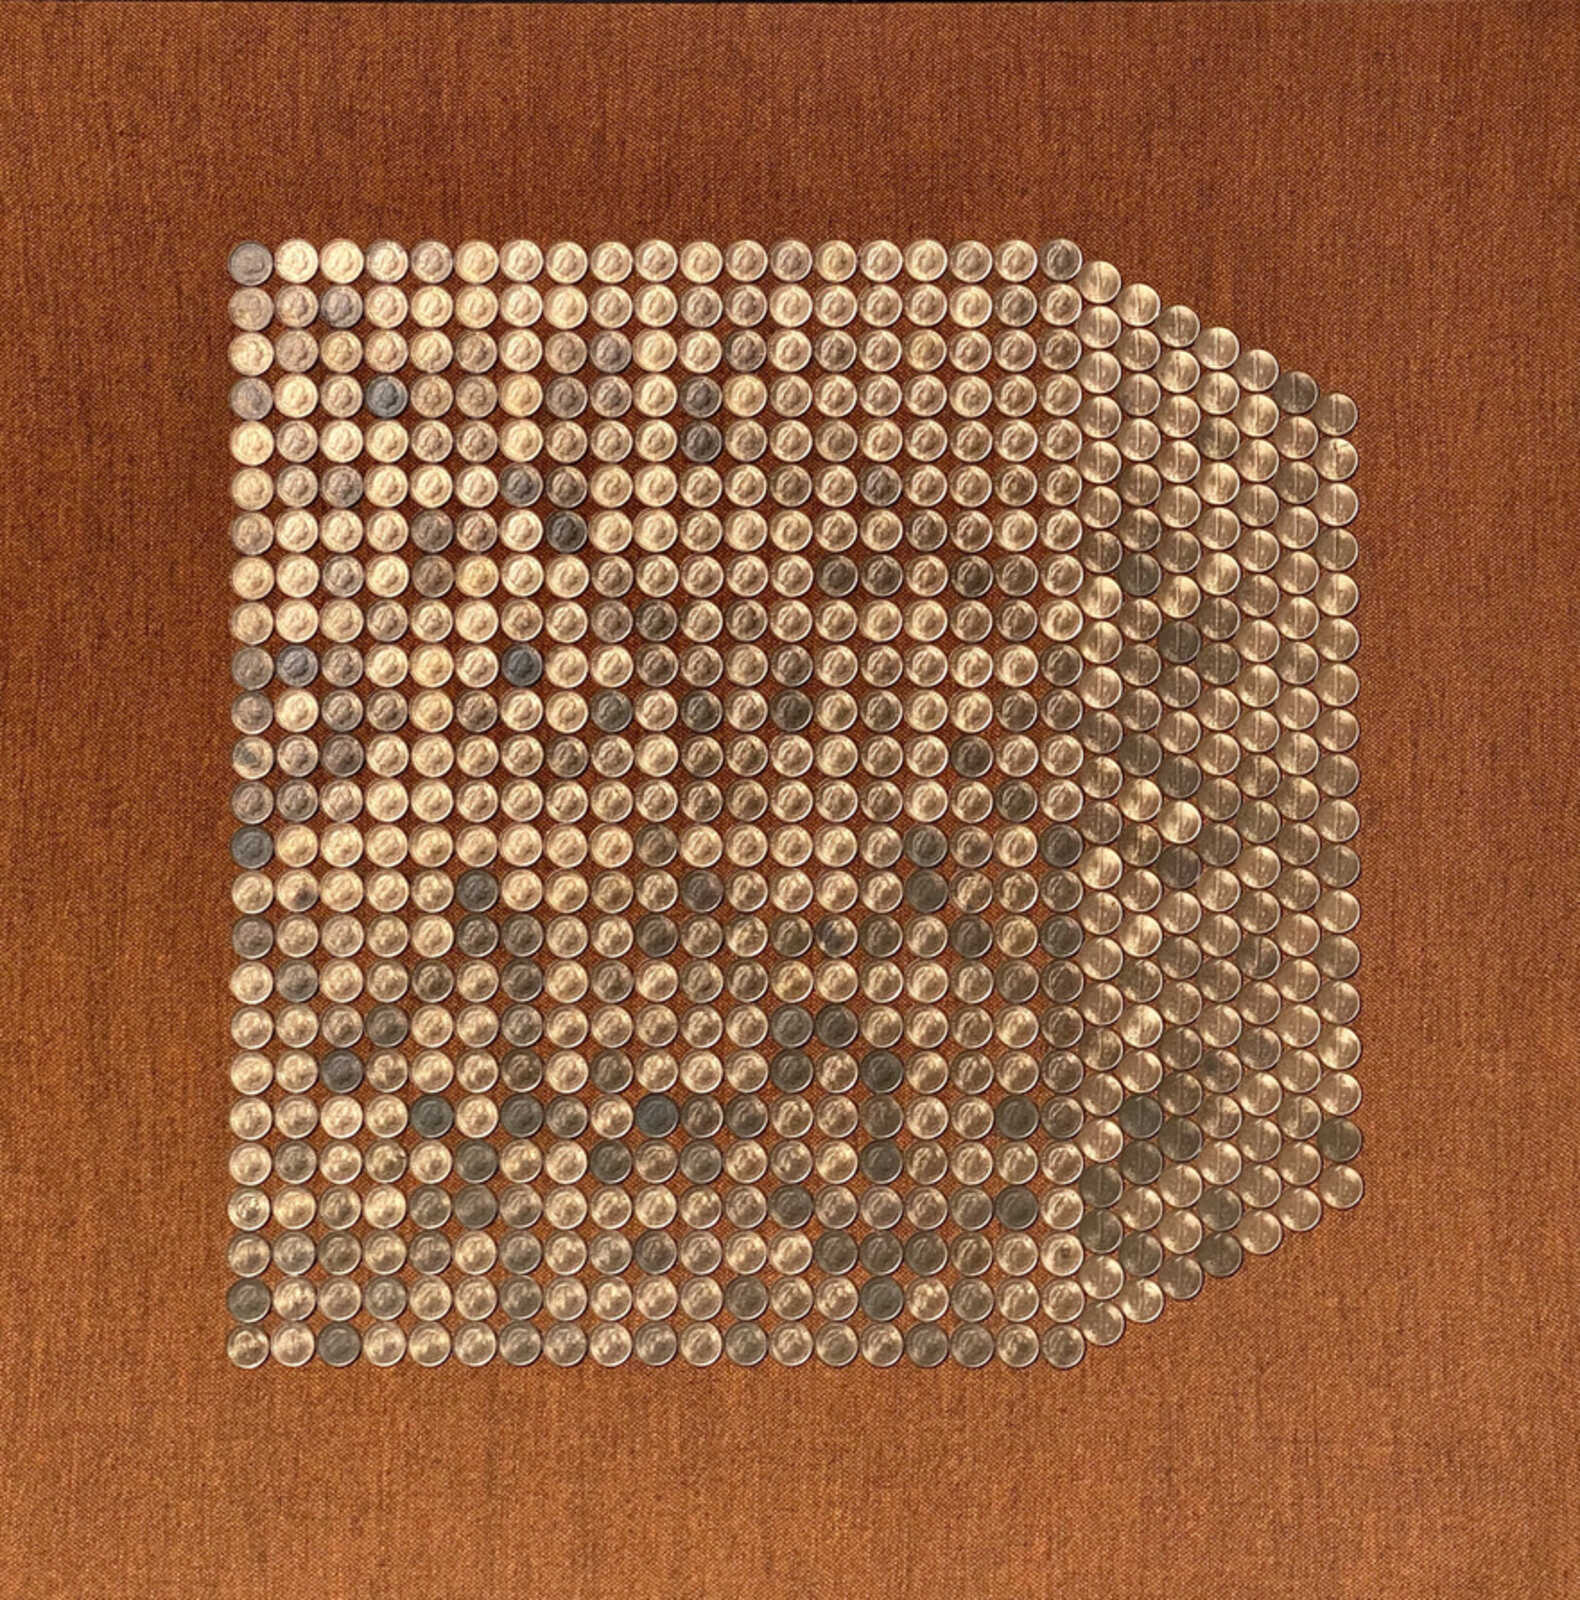 PPH 183A, Jan Henderikse, coins on panel, 1967